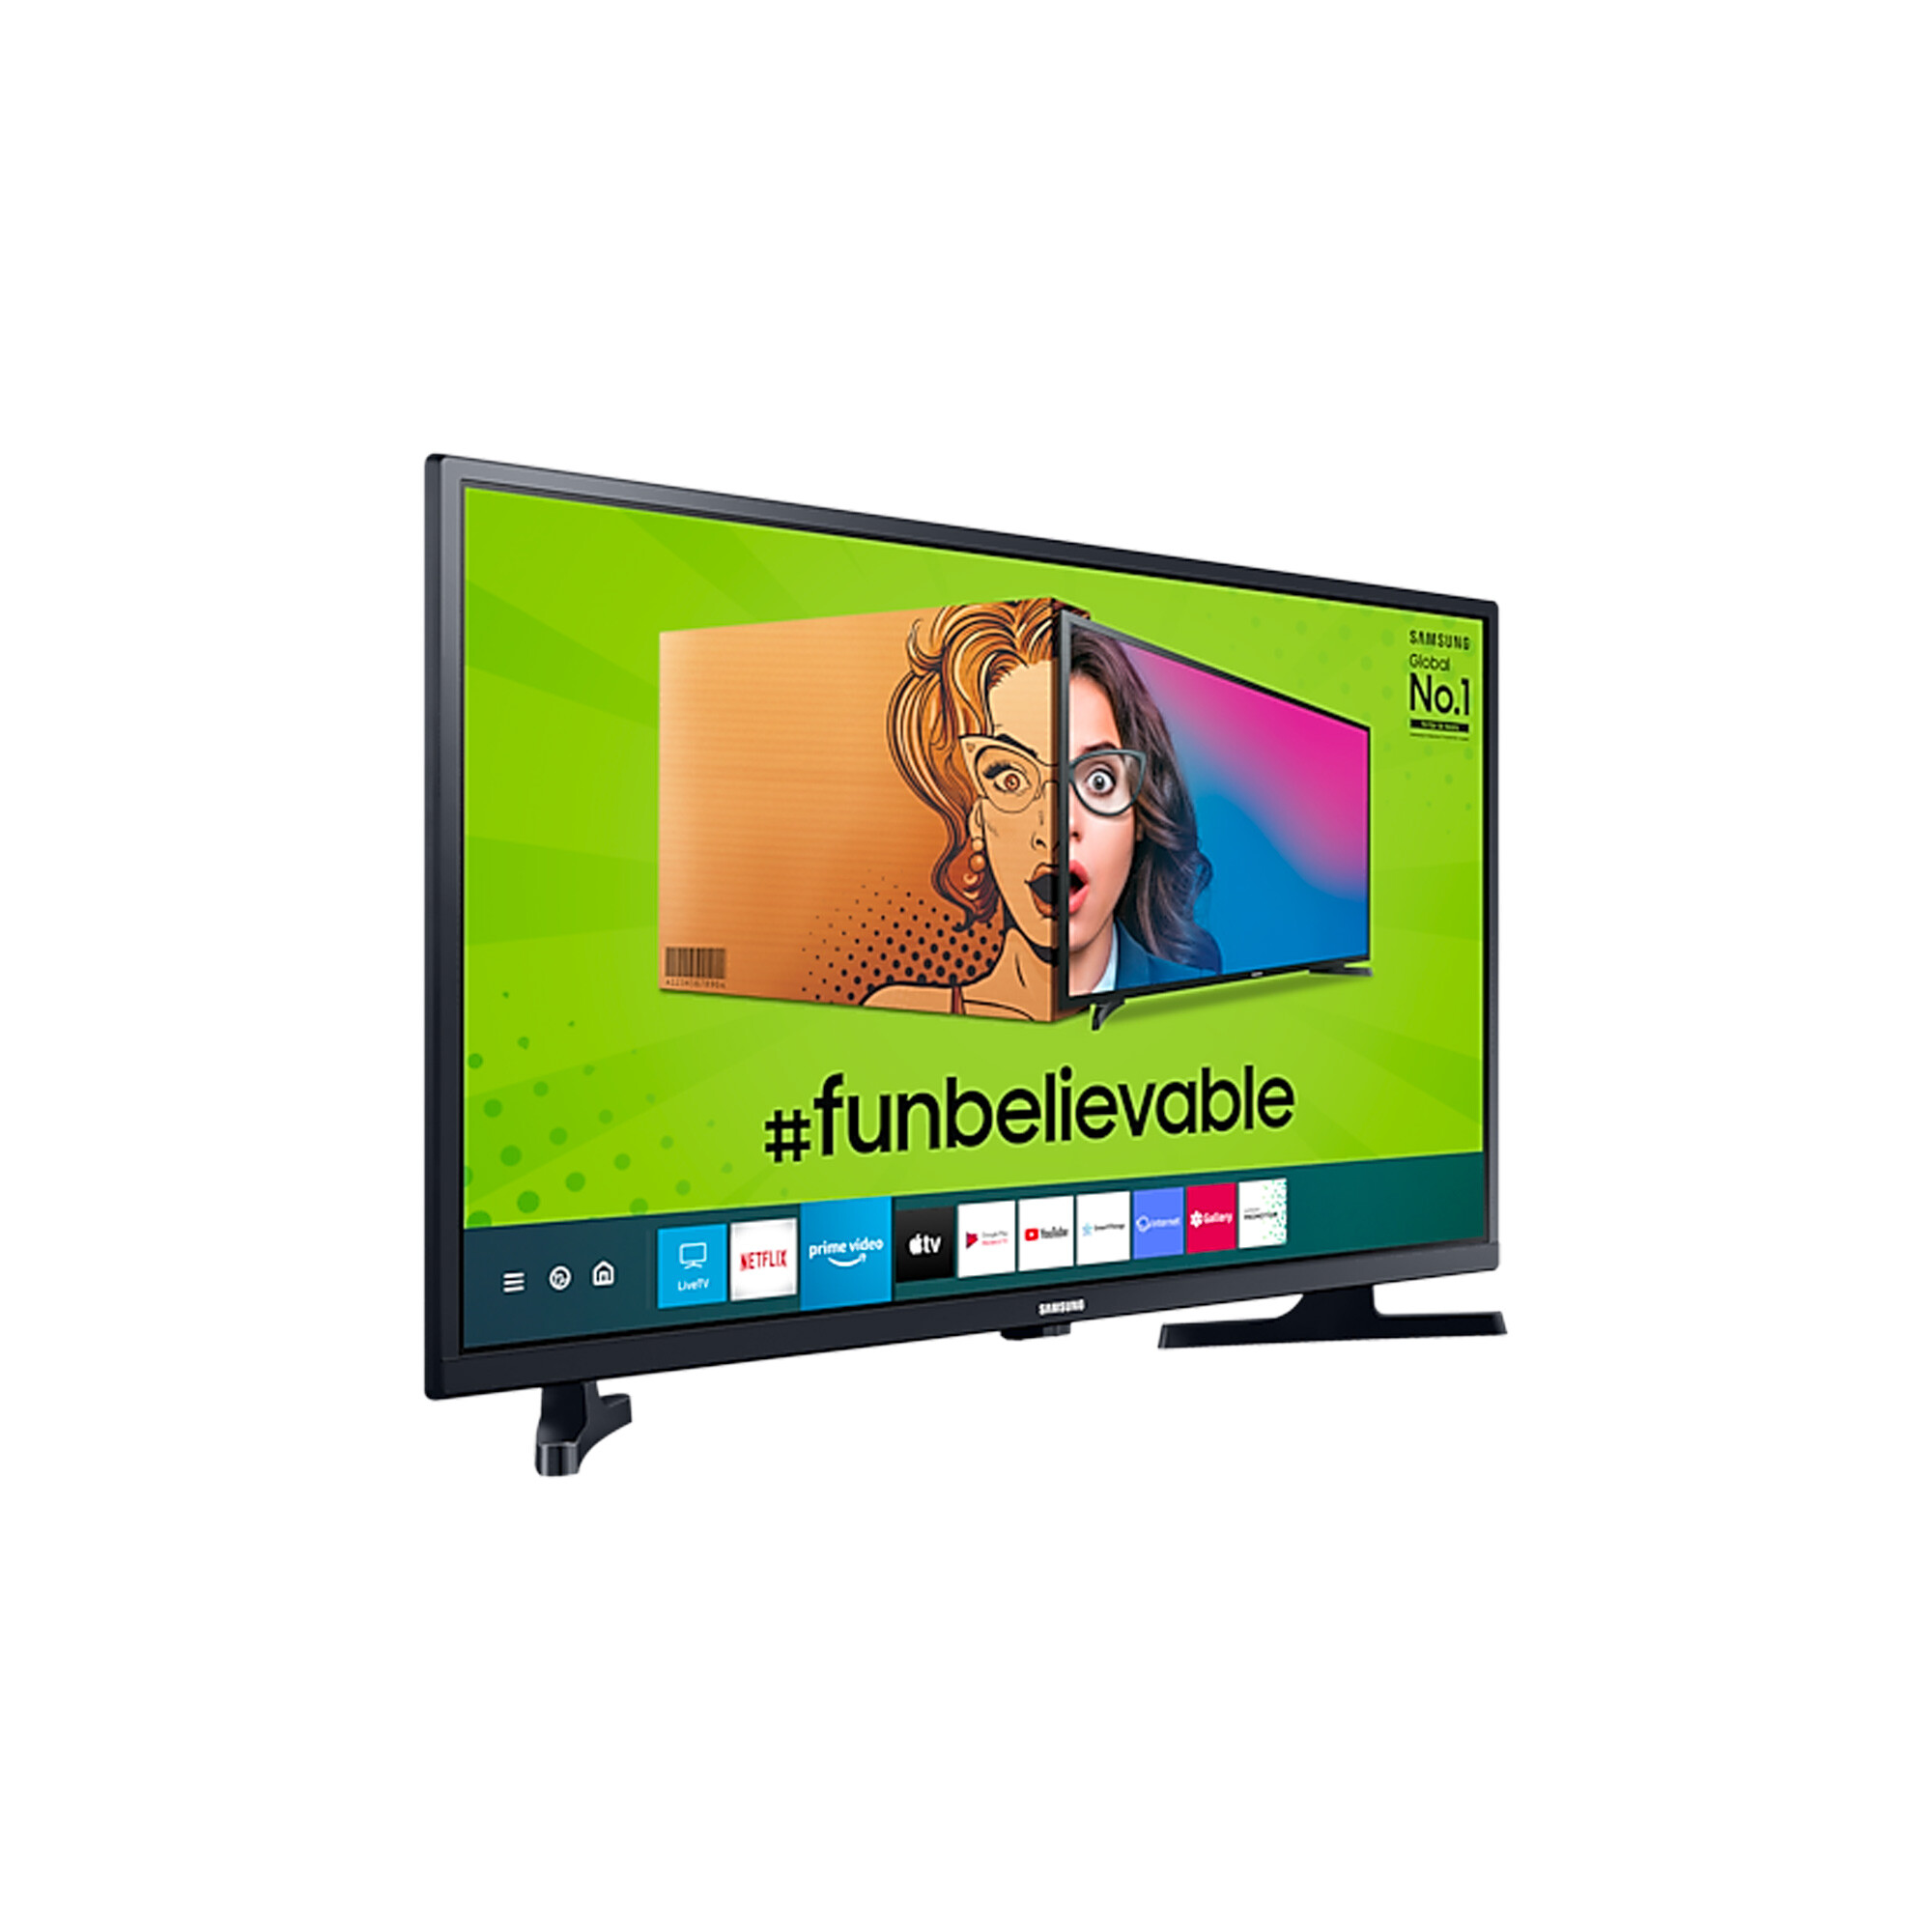 Smart TV Samsung 32 HD - UN32T4310 —